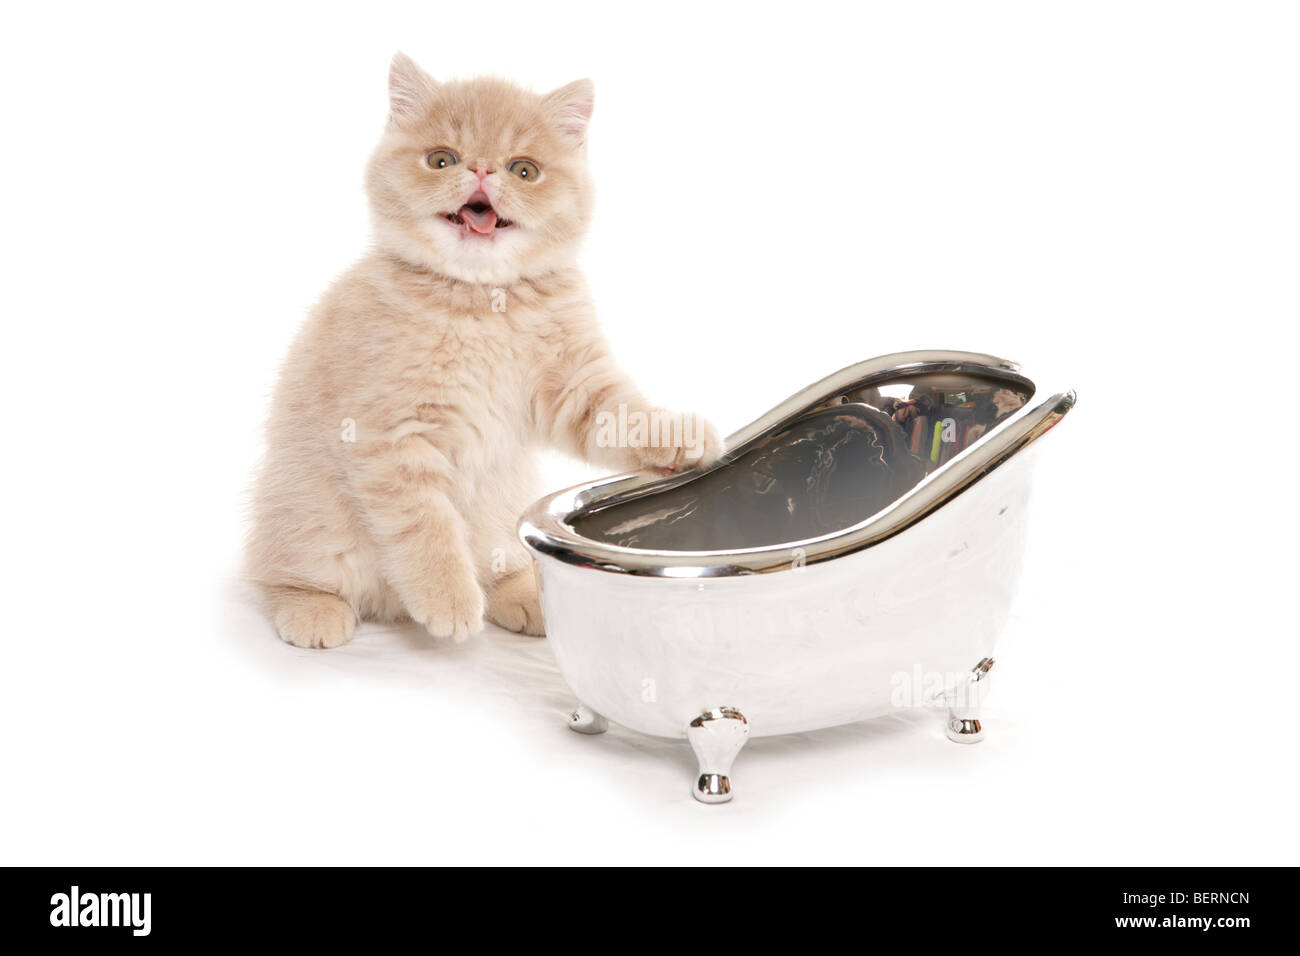 exotic kitten with a small silver bath studio portrait Stock Photo